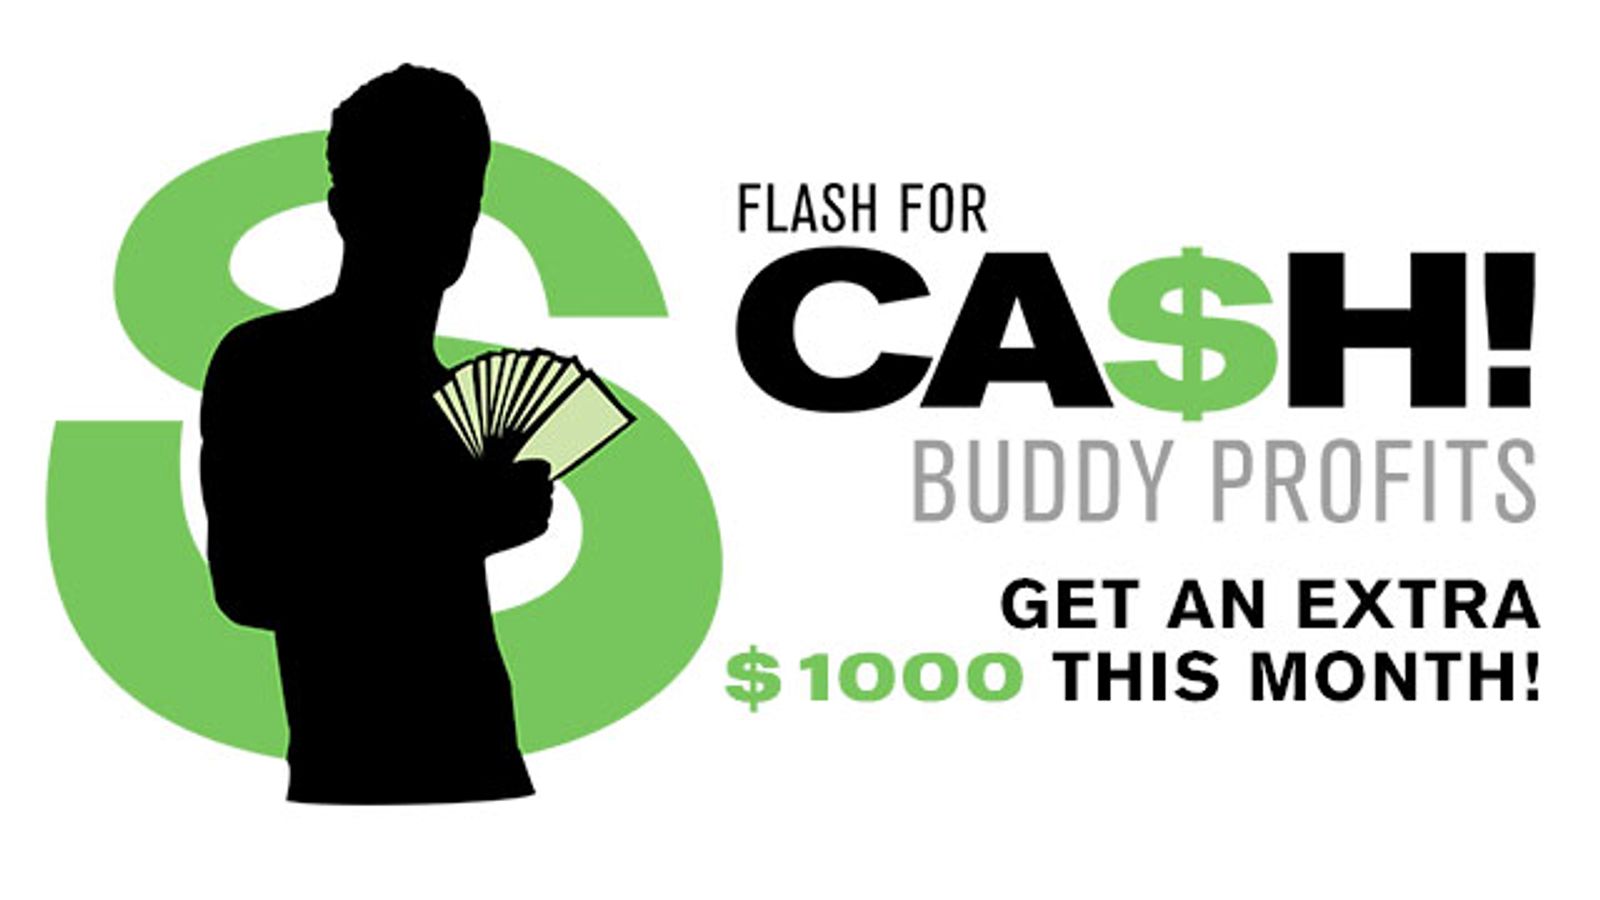 Buddy Profits Begins ‘Flash for Cash’ Affiliate Contest